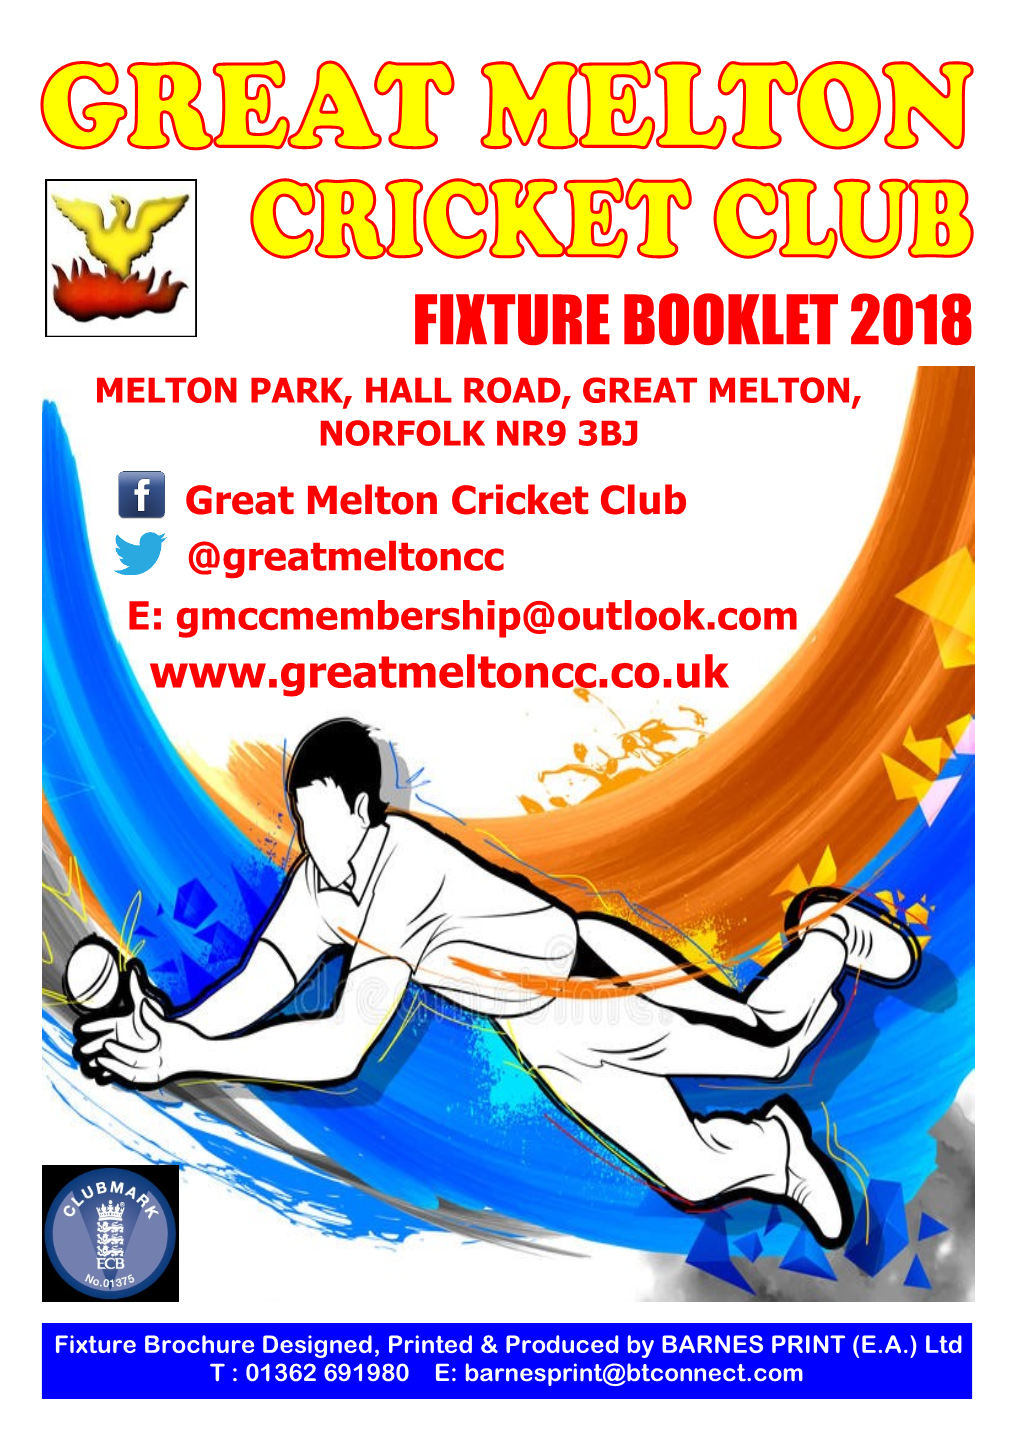 Fixture Booklet 2018 Melton Park, Hall Road, Great Melton, Norfolk Nr9 3Bj